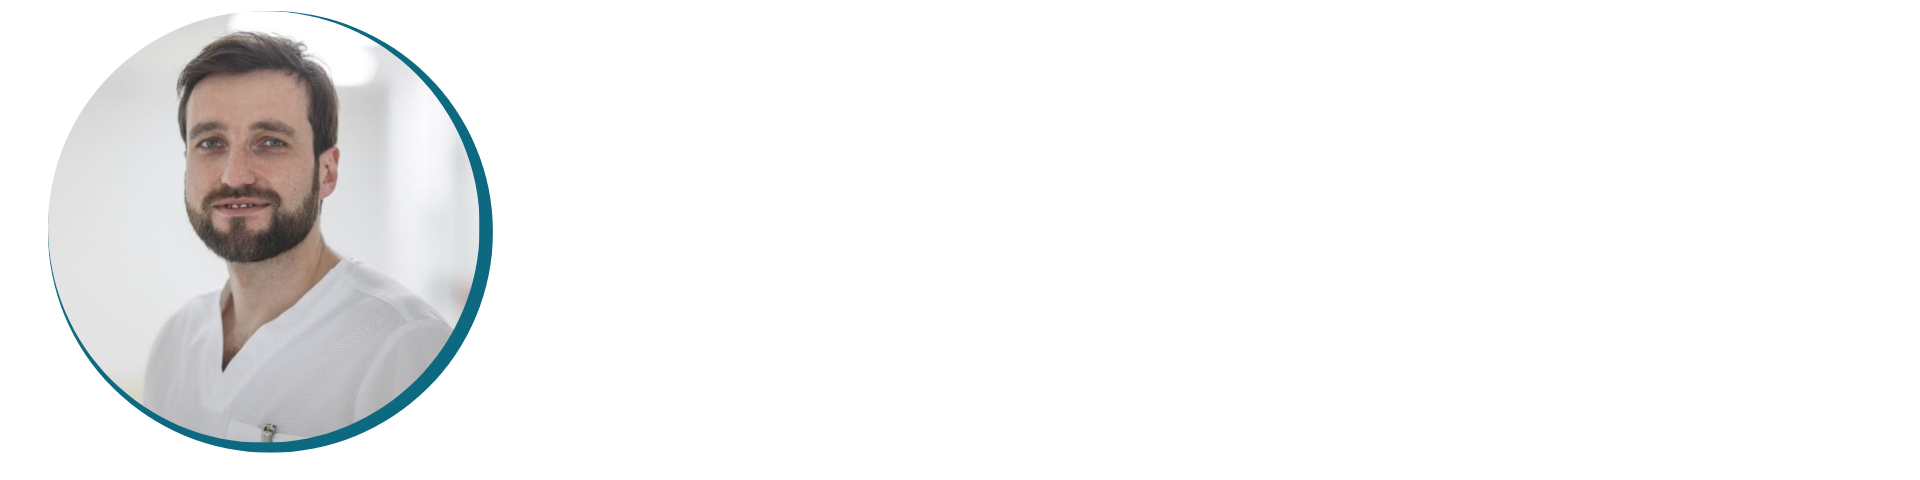 Our Expert Analyst, the doctor Razvan Radu from CHU Montpellier - FRANCE